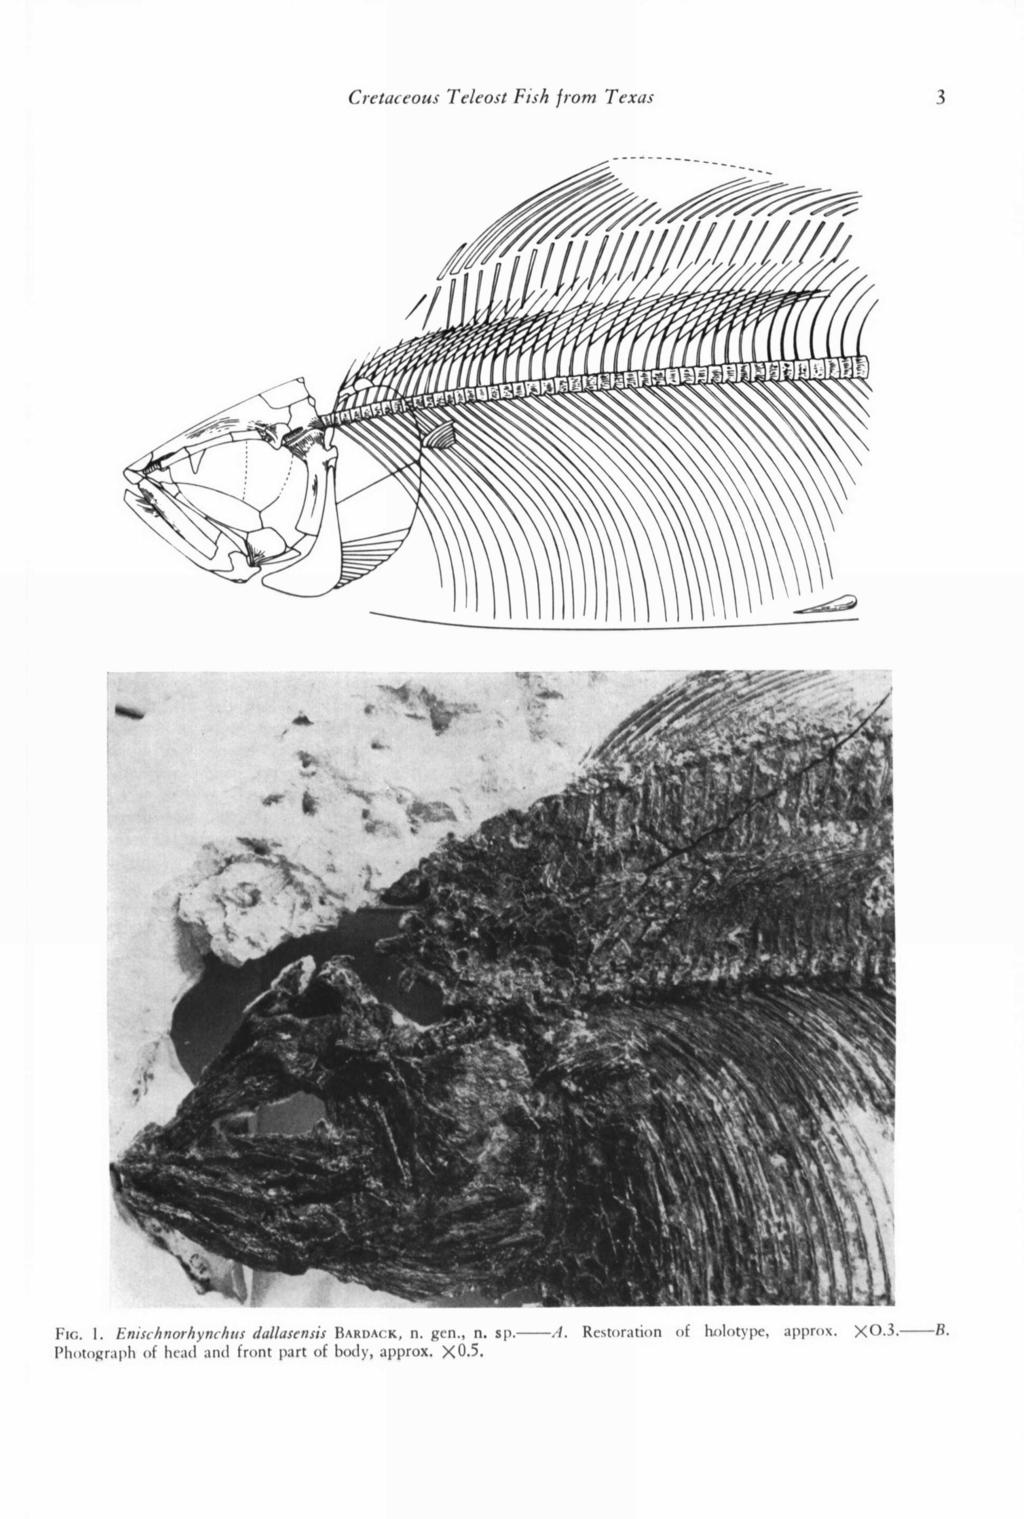 Cretaceous Teleost Fish from Texas 3 FIG. I. Enischnorhynchus dallusensis BARDACK, n. gen., n. sp.